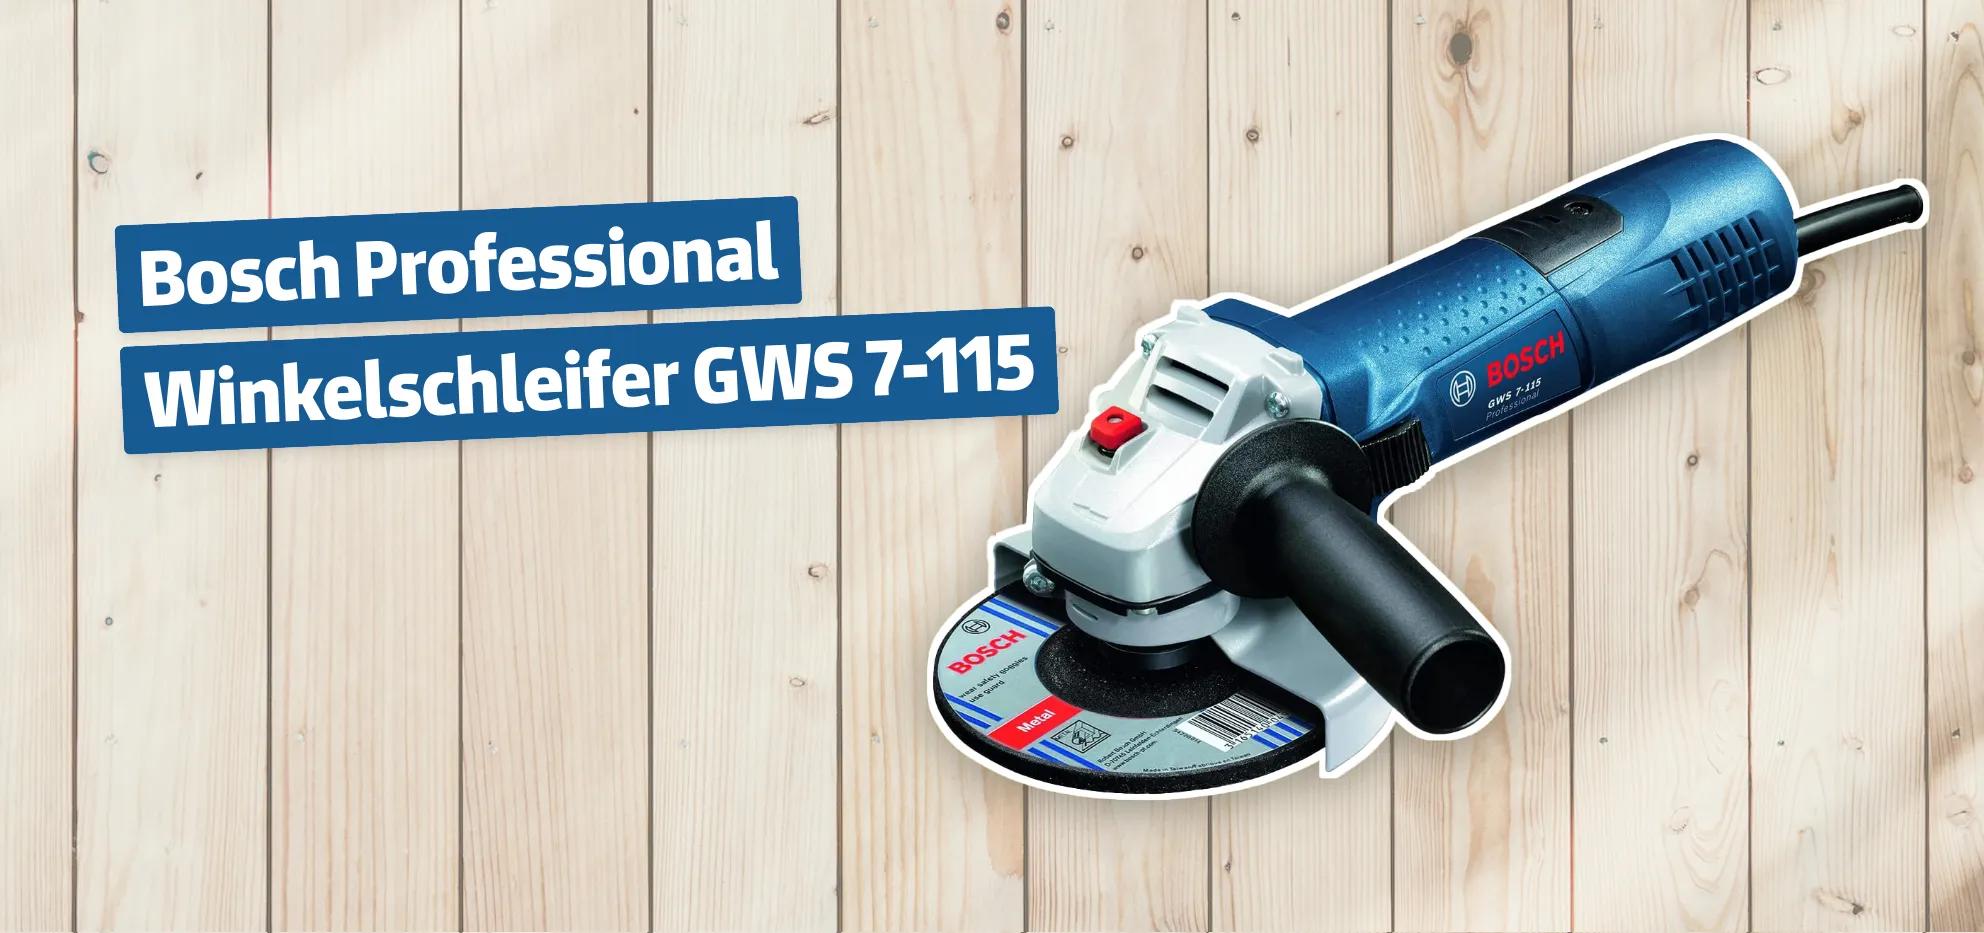 Bosch Professional Winkelschleifer GWS 7-115